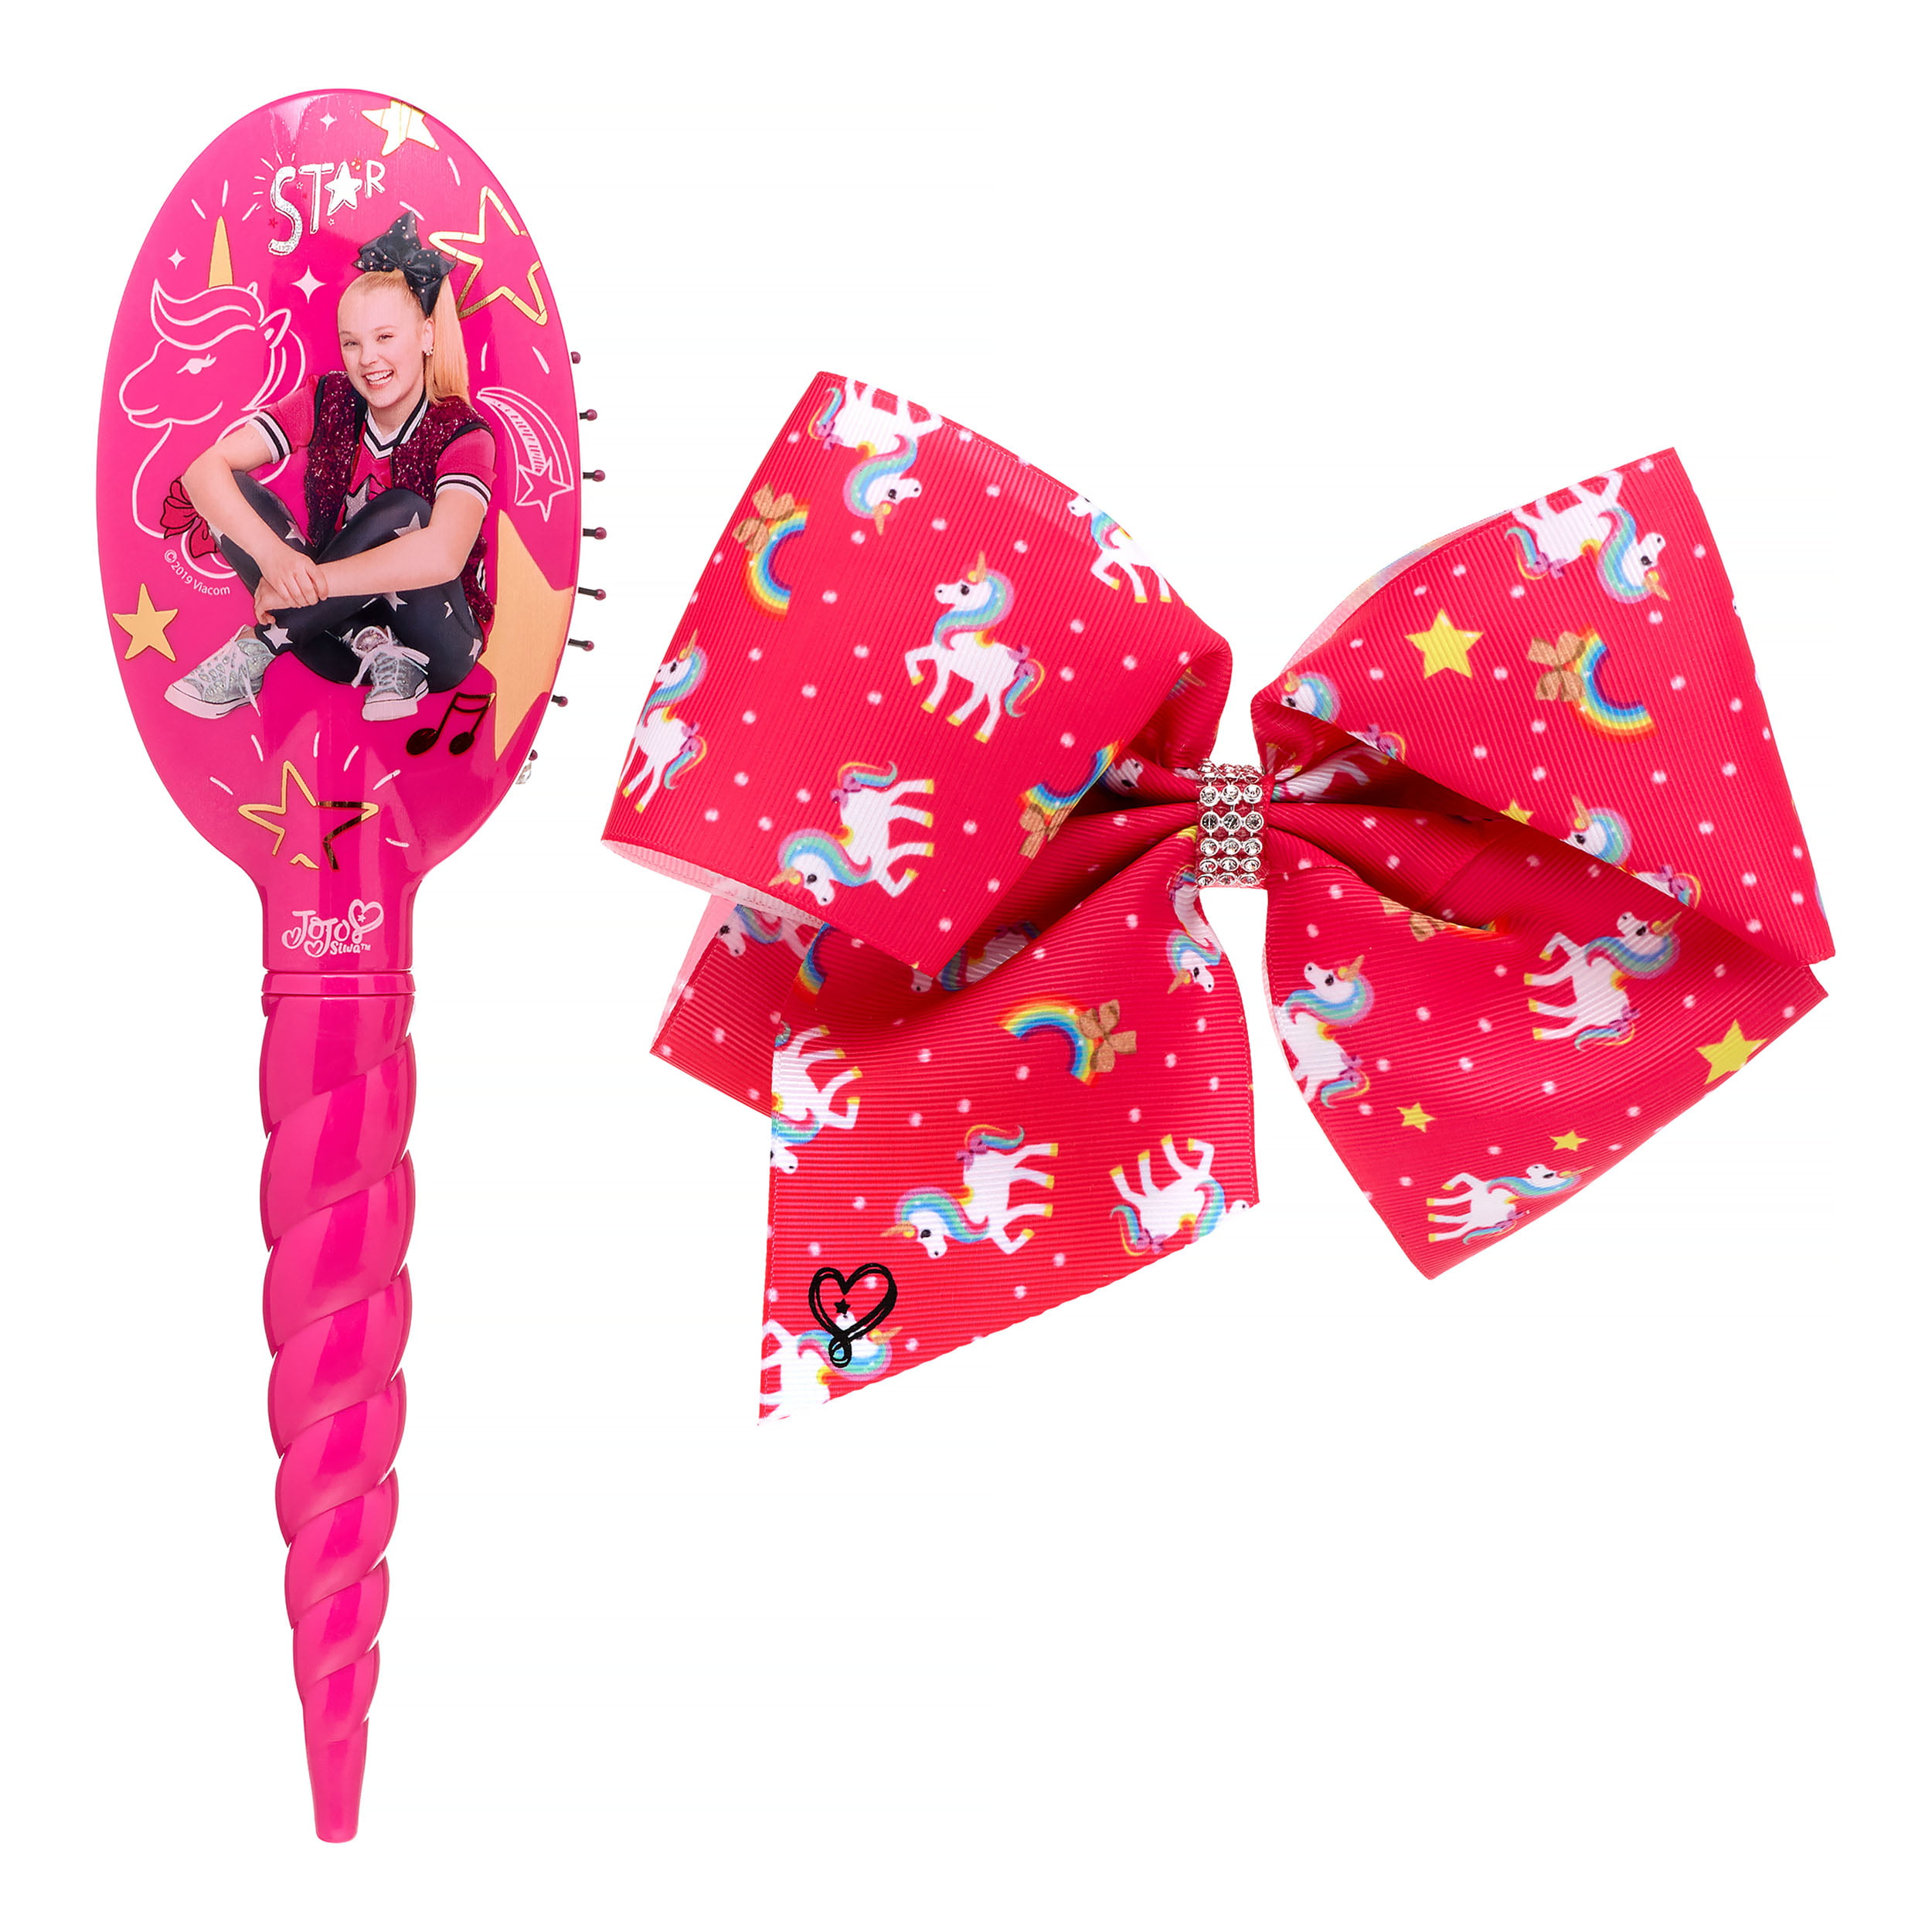 JoJo Siwa - JoJo Siwa Hair Accessory Gift Set, Pink Unicorn Hair Brush